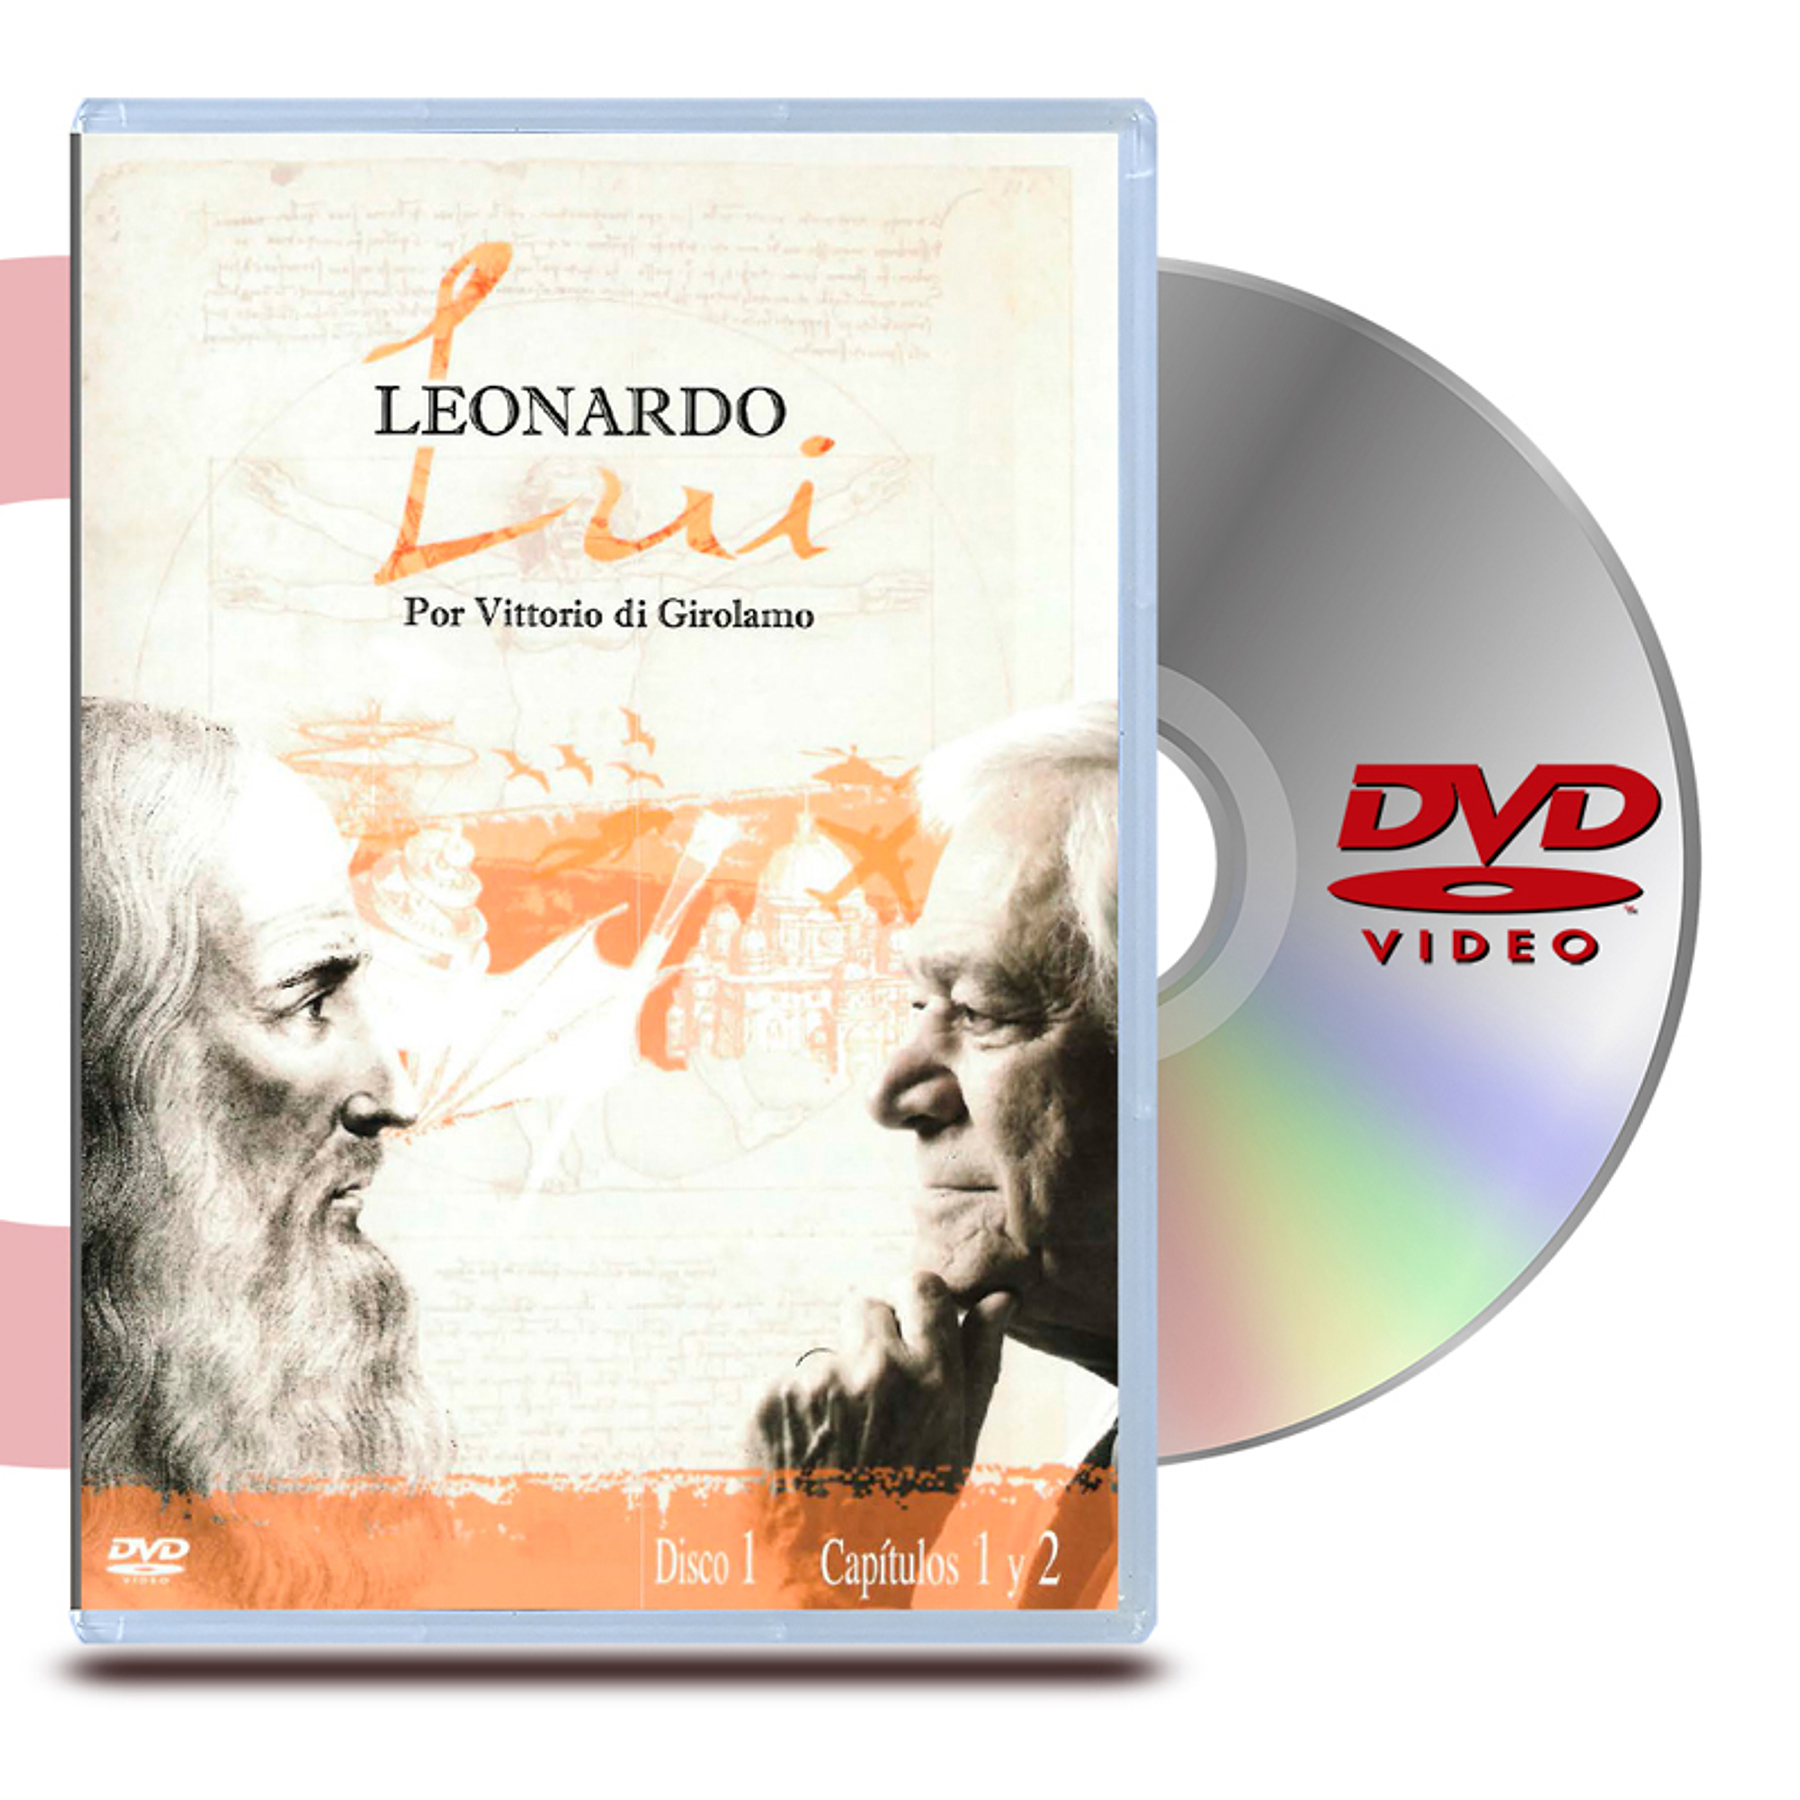 DVD LEONARDO LUI: DISCO 1 (CAP 1 Y 2)